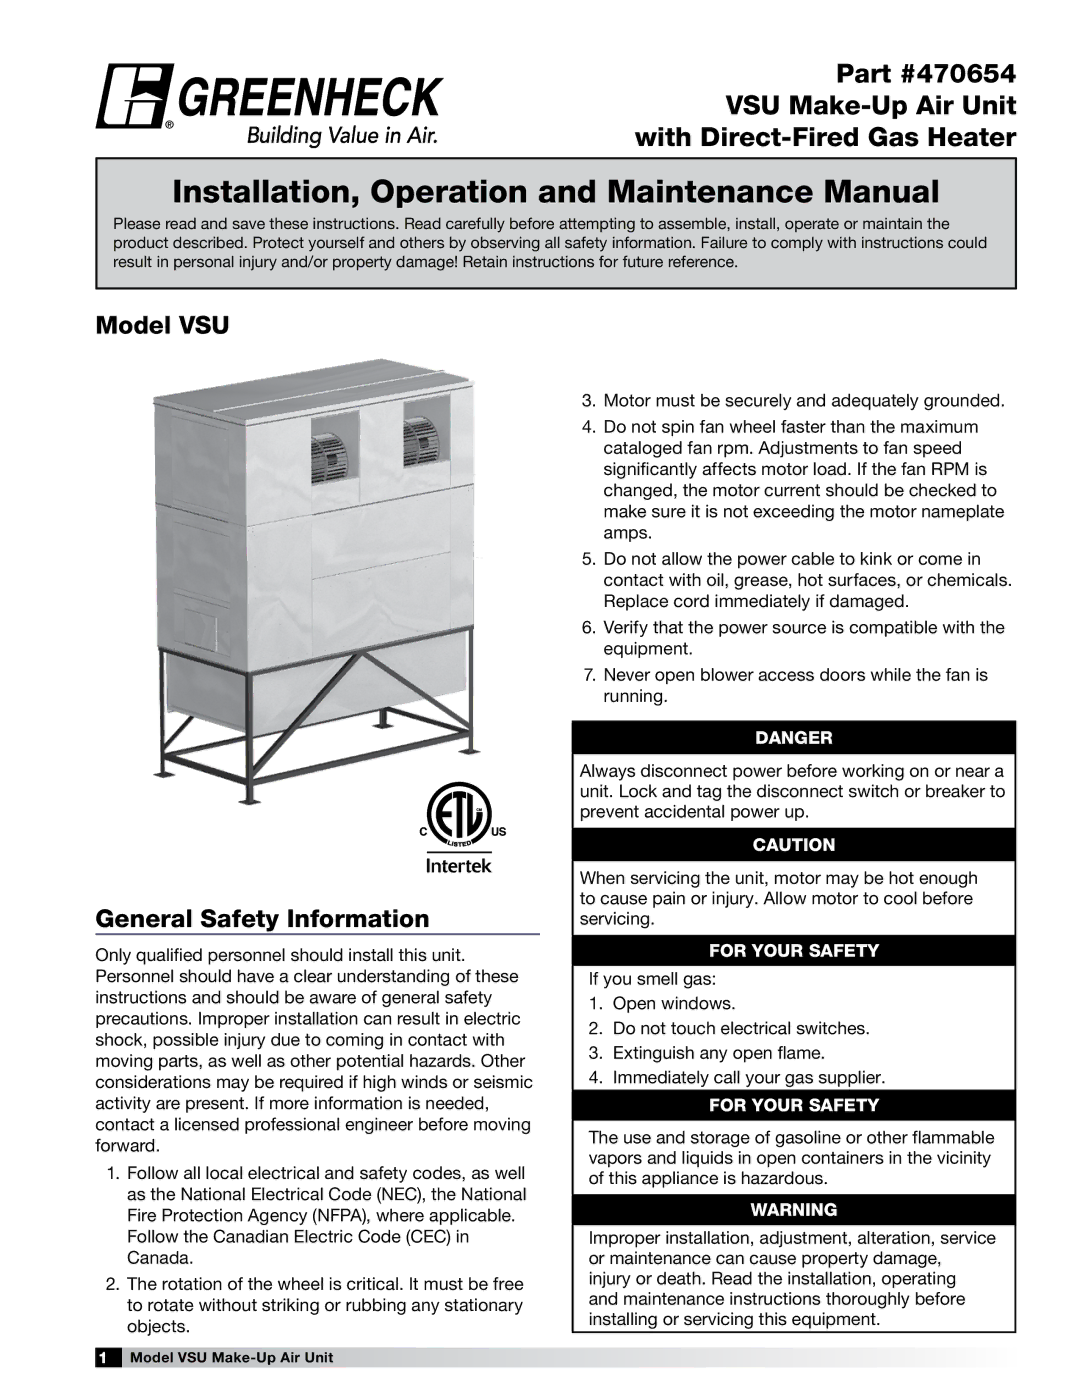 Greenheck Fan 470654 manual Installation, Operation and Maintenance Manual, Model VSU General Safety Information 